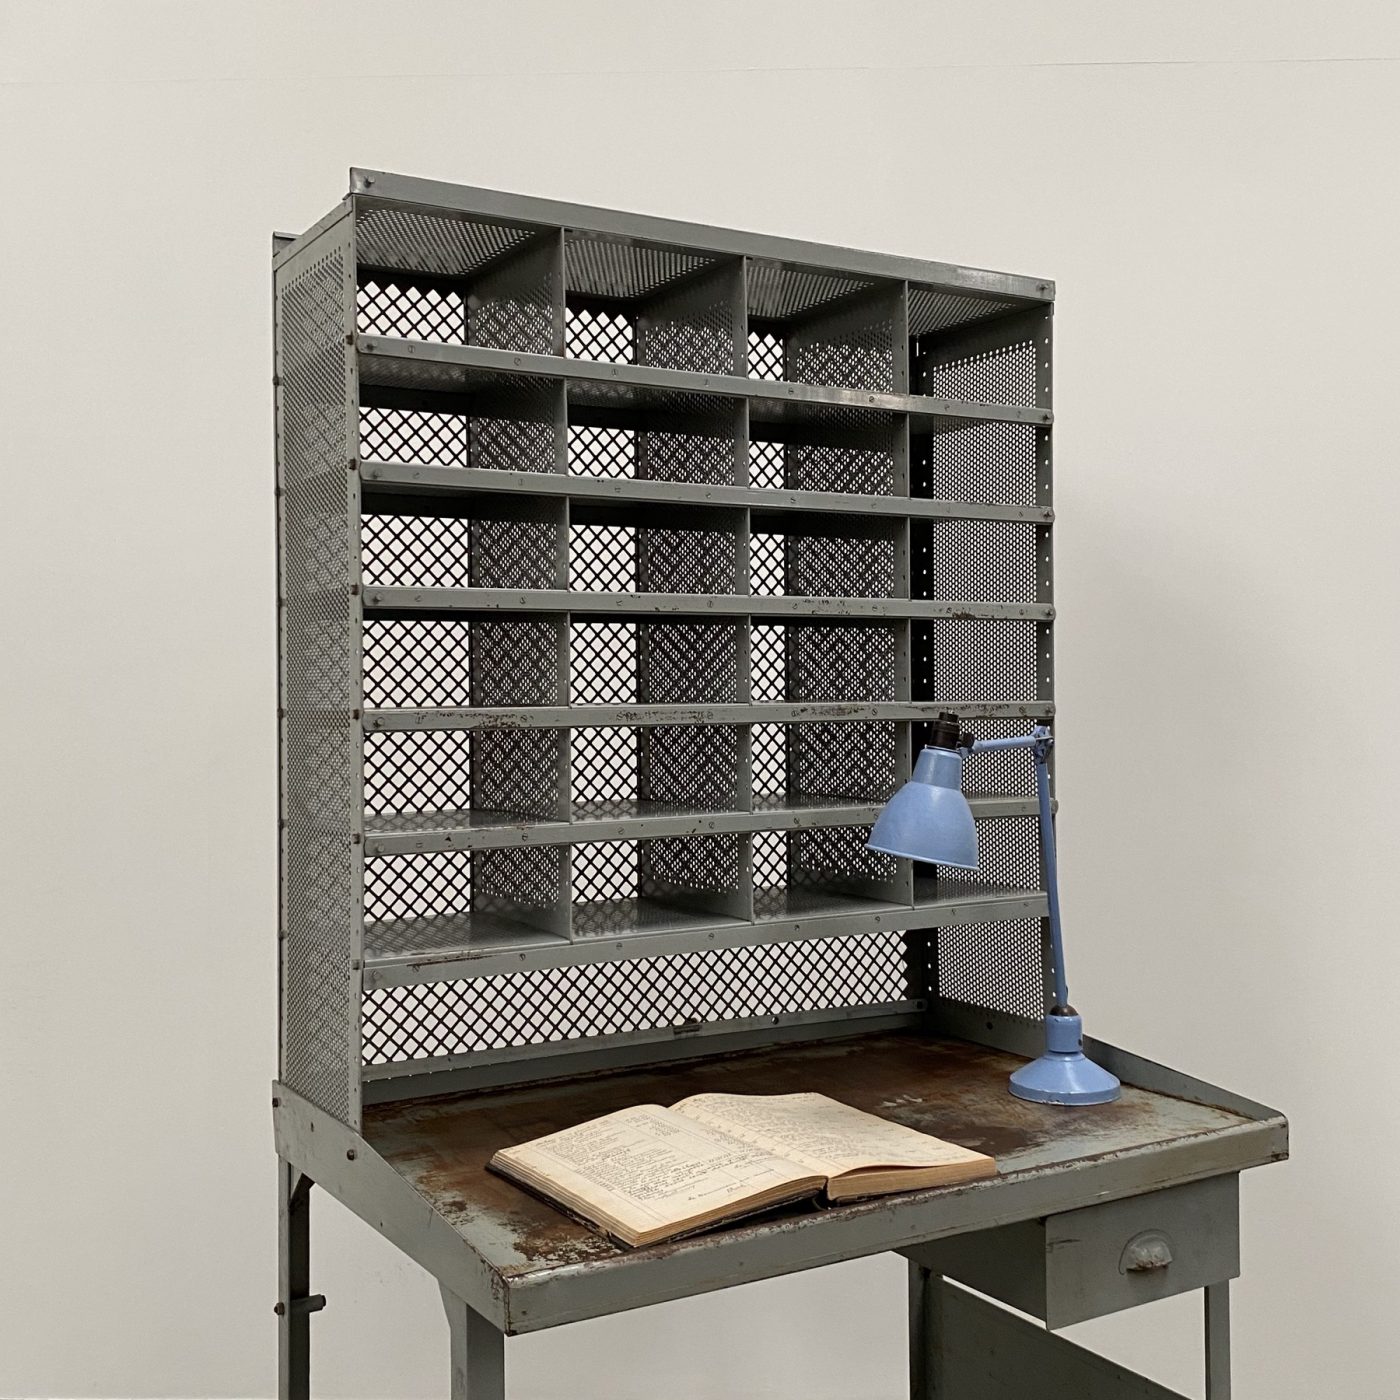 objet-vagabond-postal-desk0001